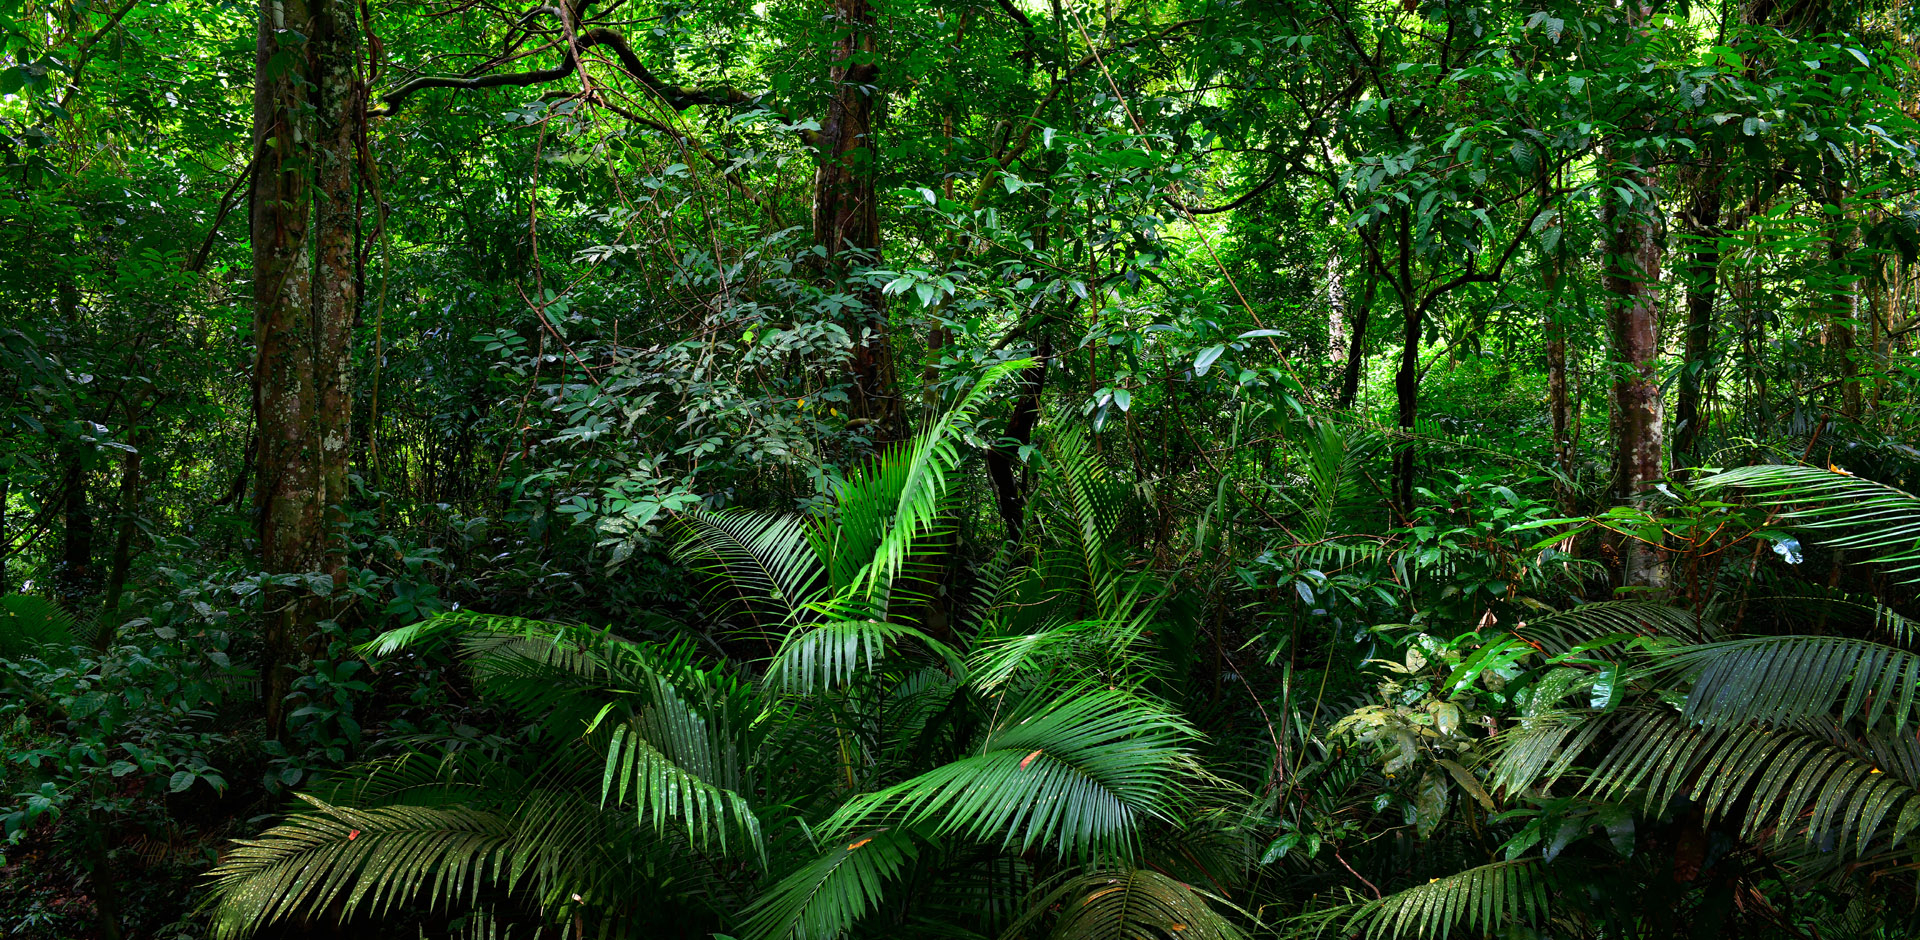 ferns in a green tropical rainforest